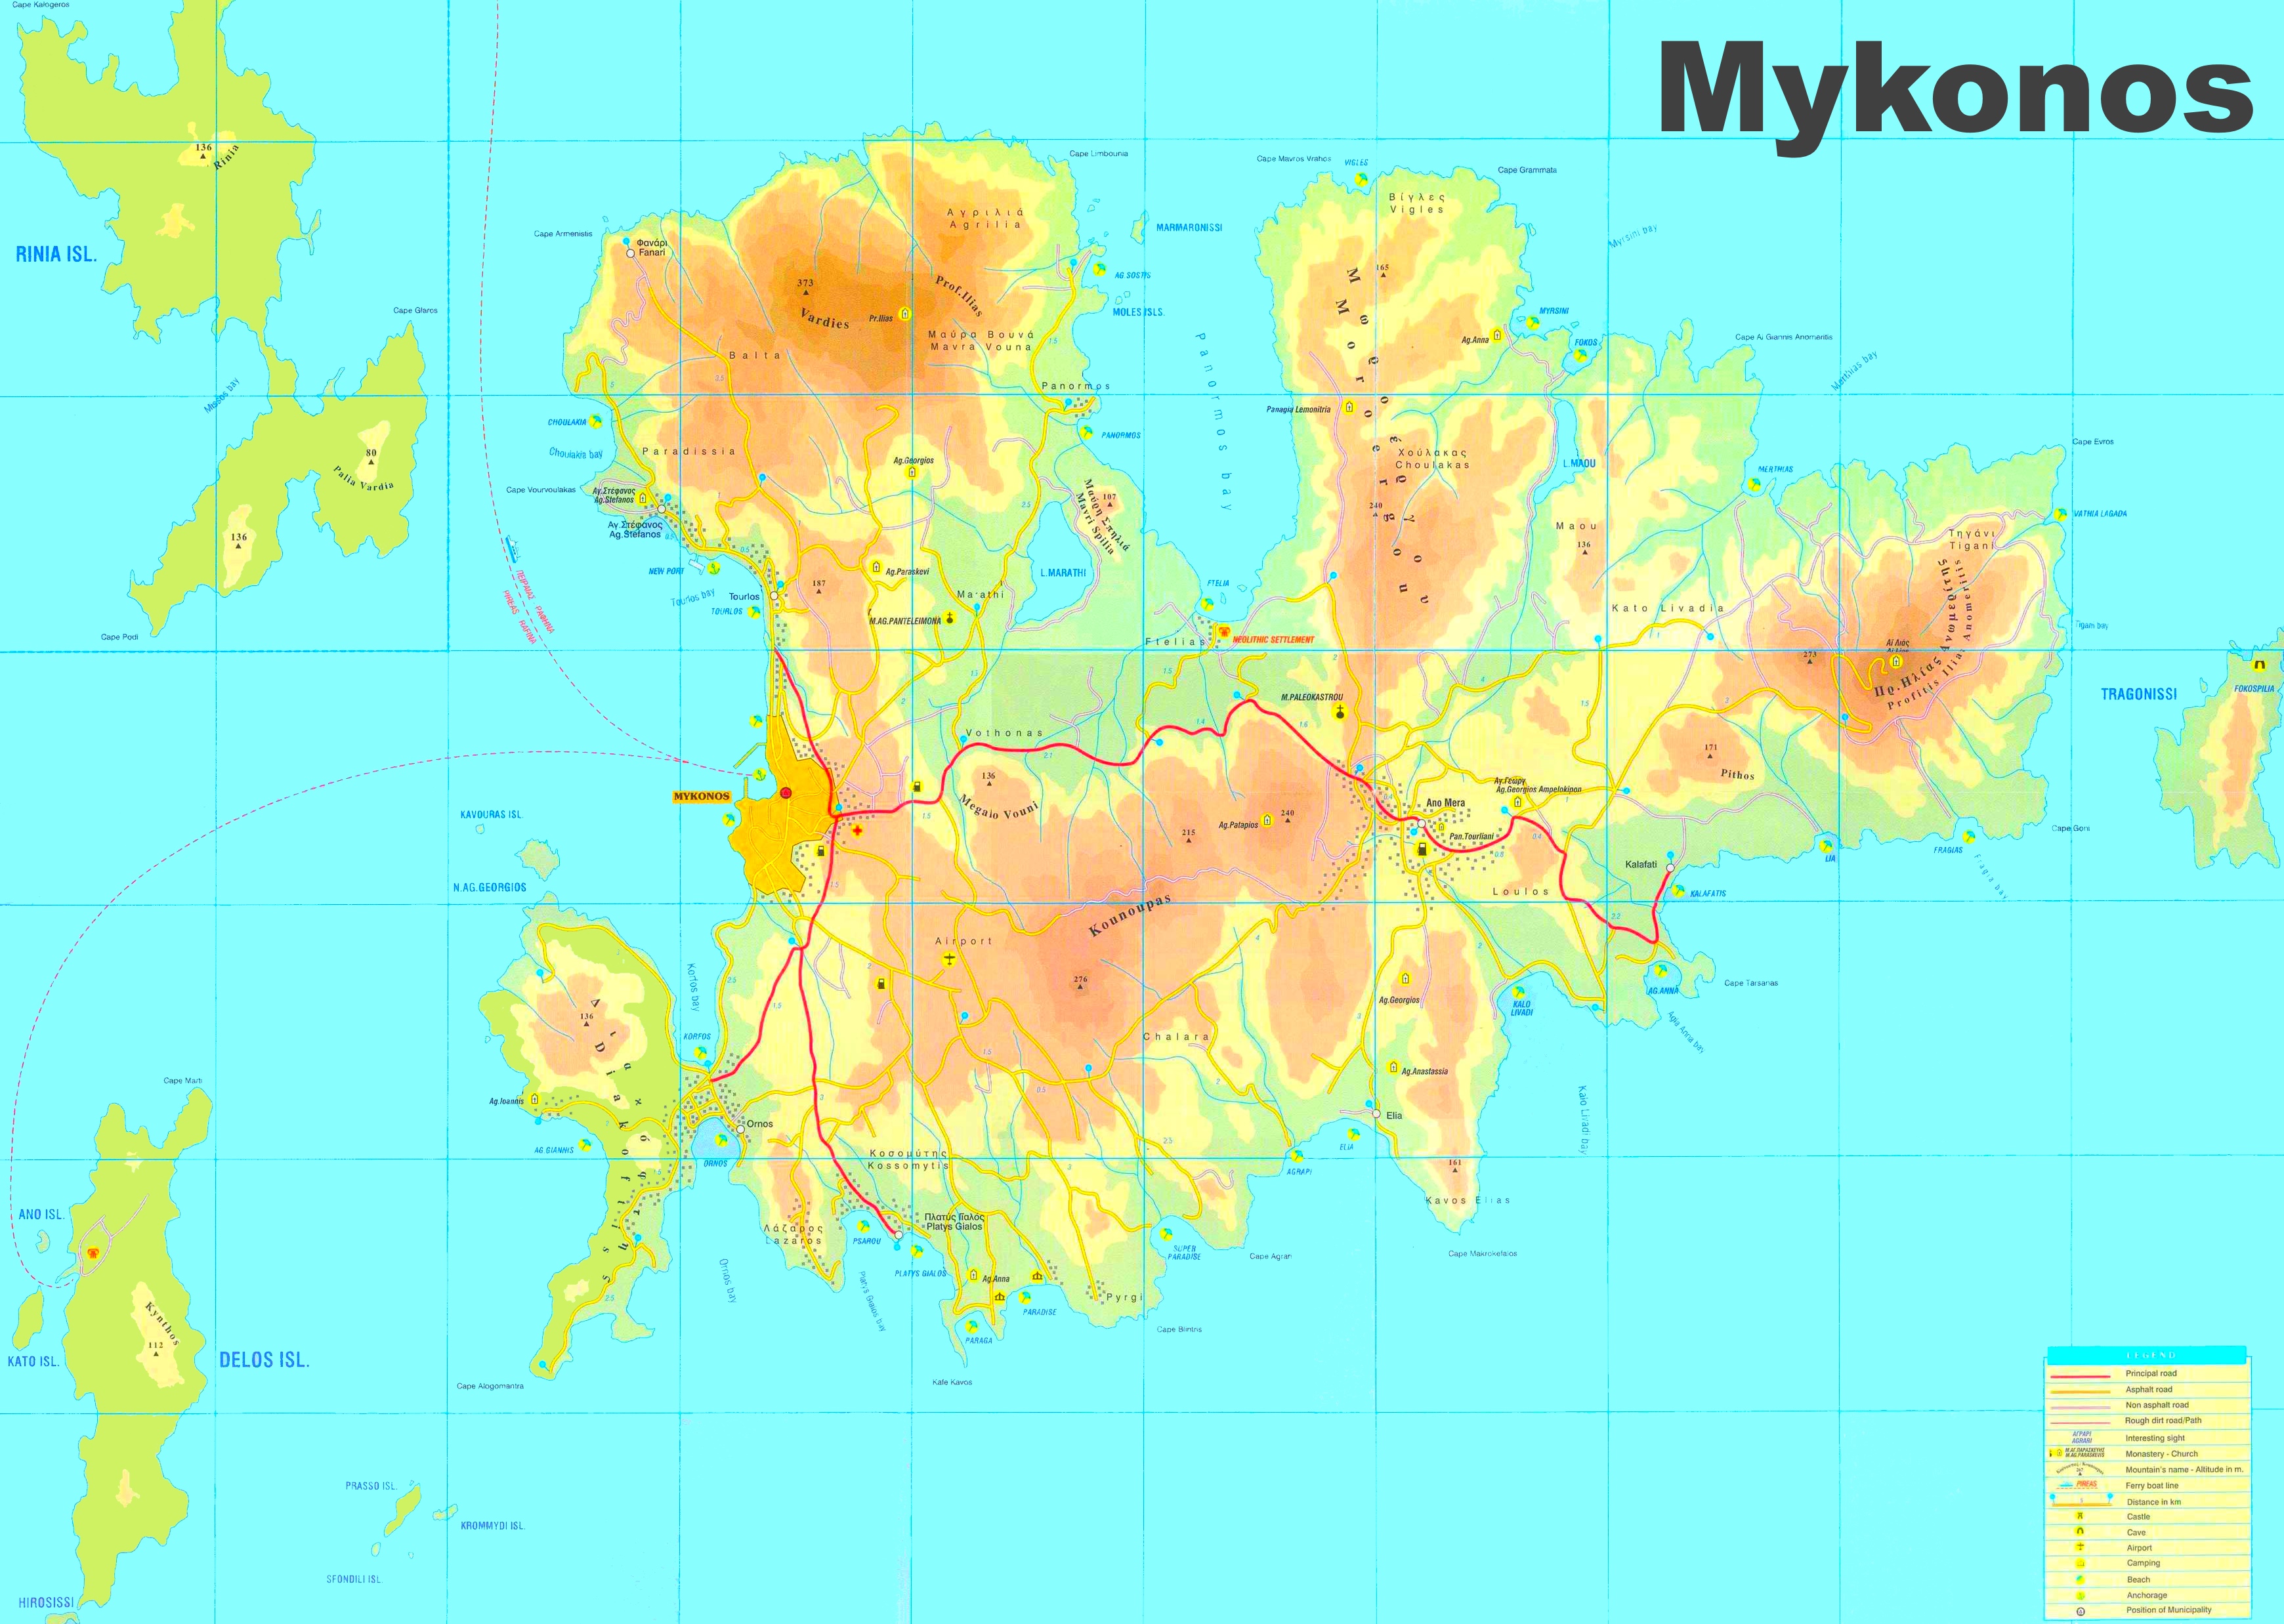 mykonos-tourist-attractions-map.jpg